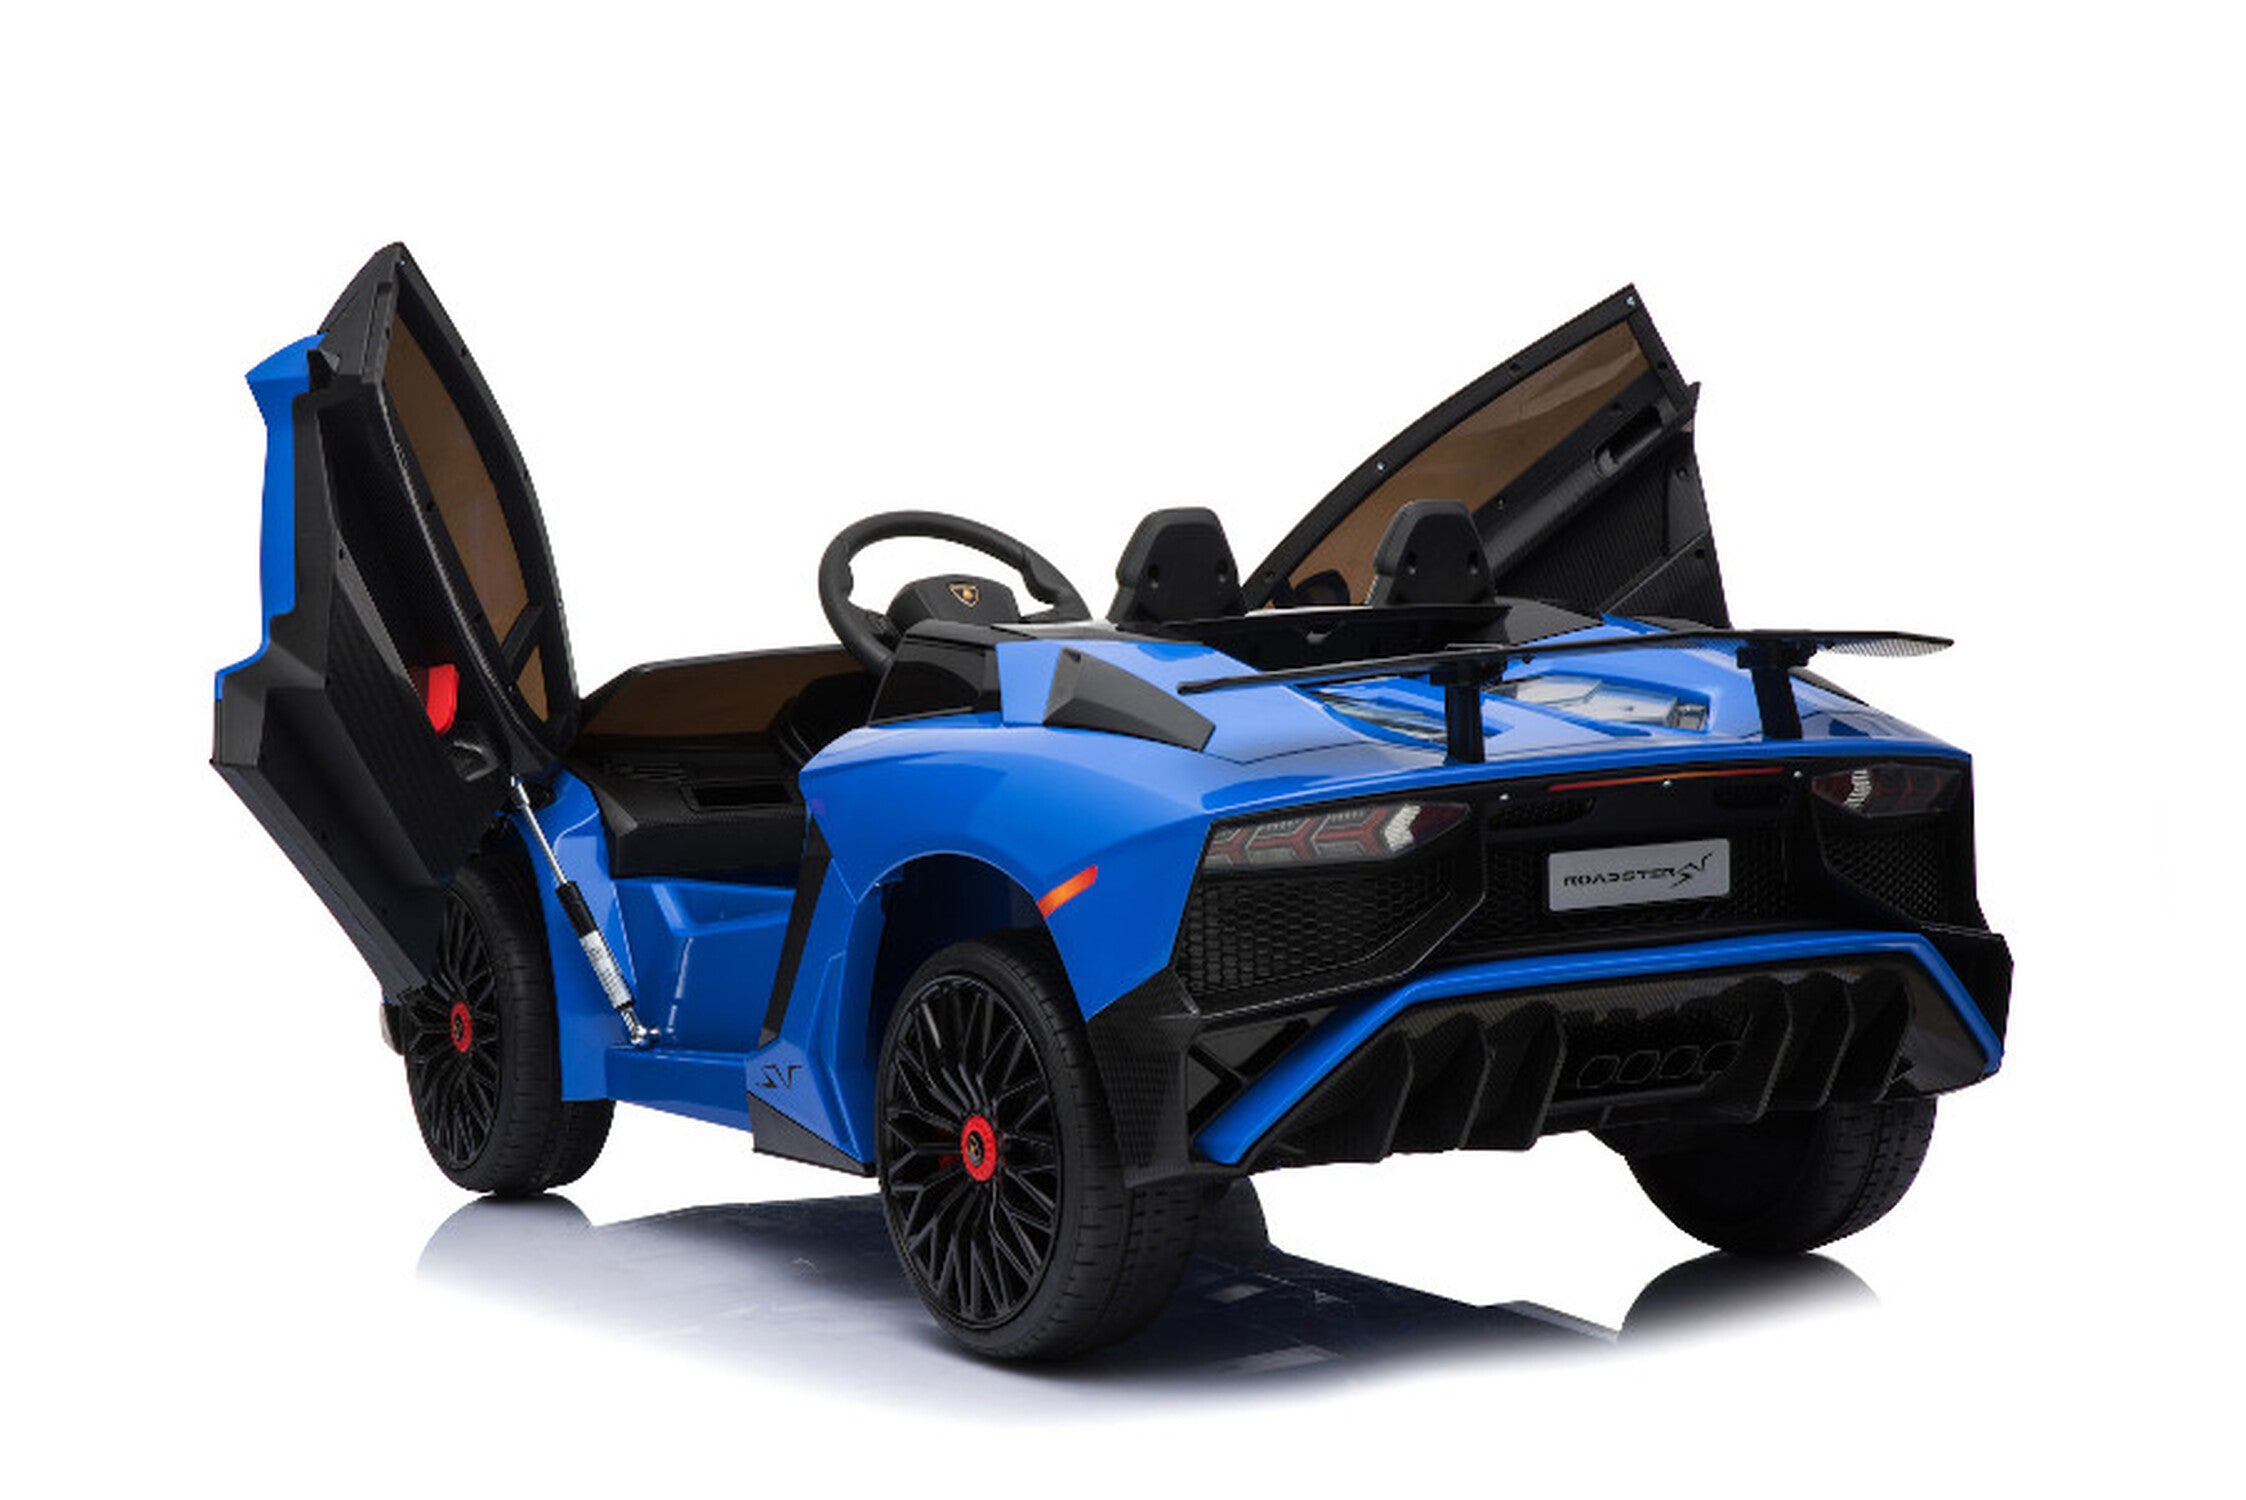 TPFLiving Elektro-Kinderauto Lamborghini Aventador SVJ - Kinderauto - Elektroauto - Ledersitz und Sicherheitsgurt